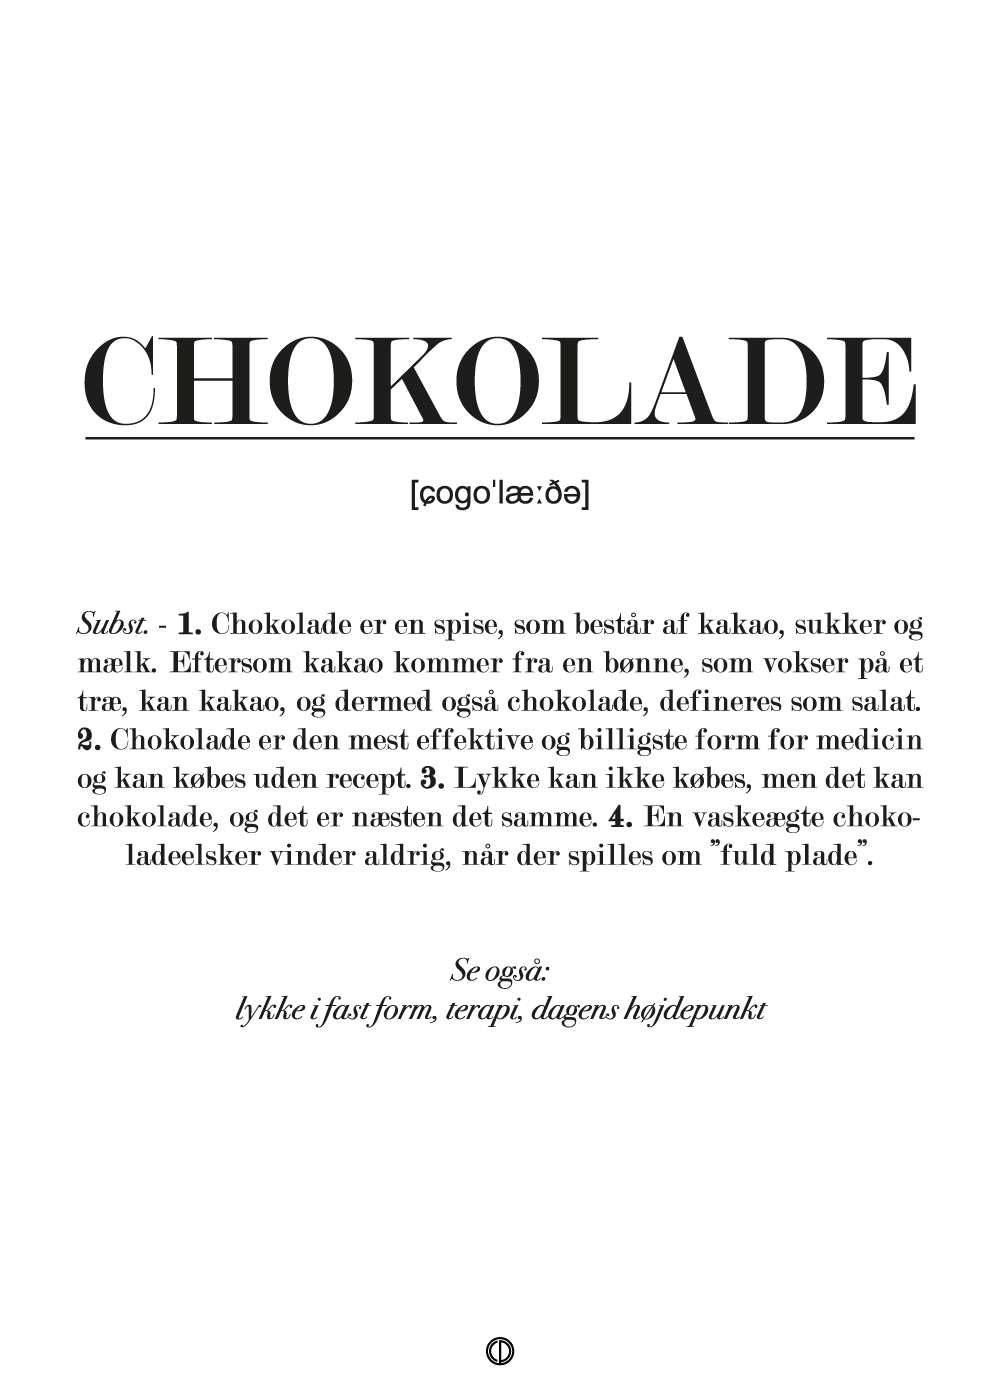 Chokolade definition - plakat